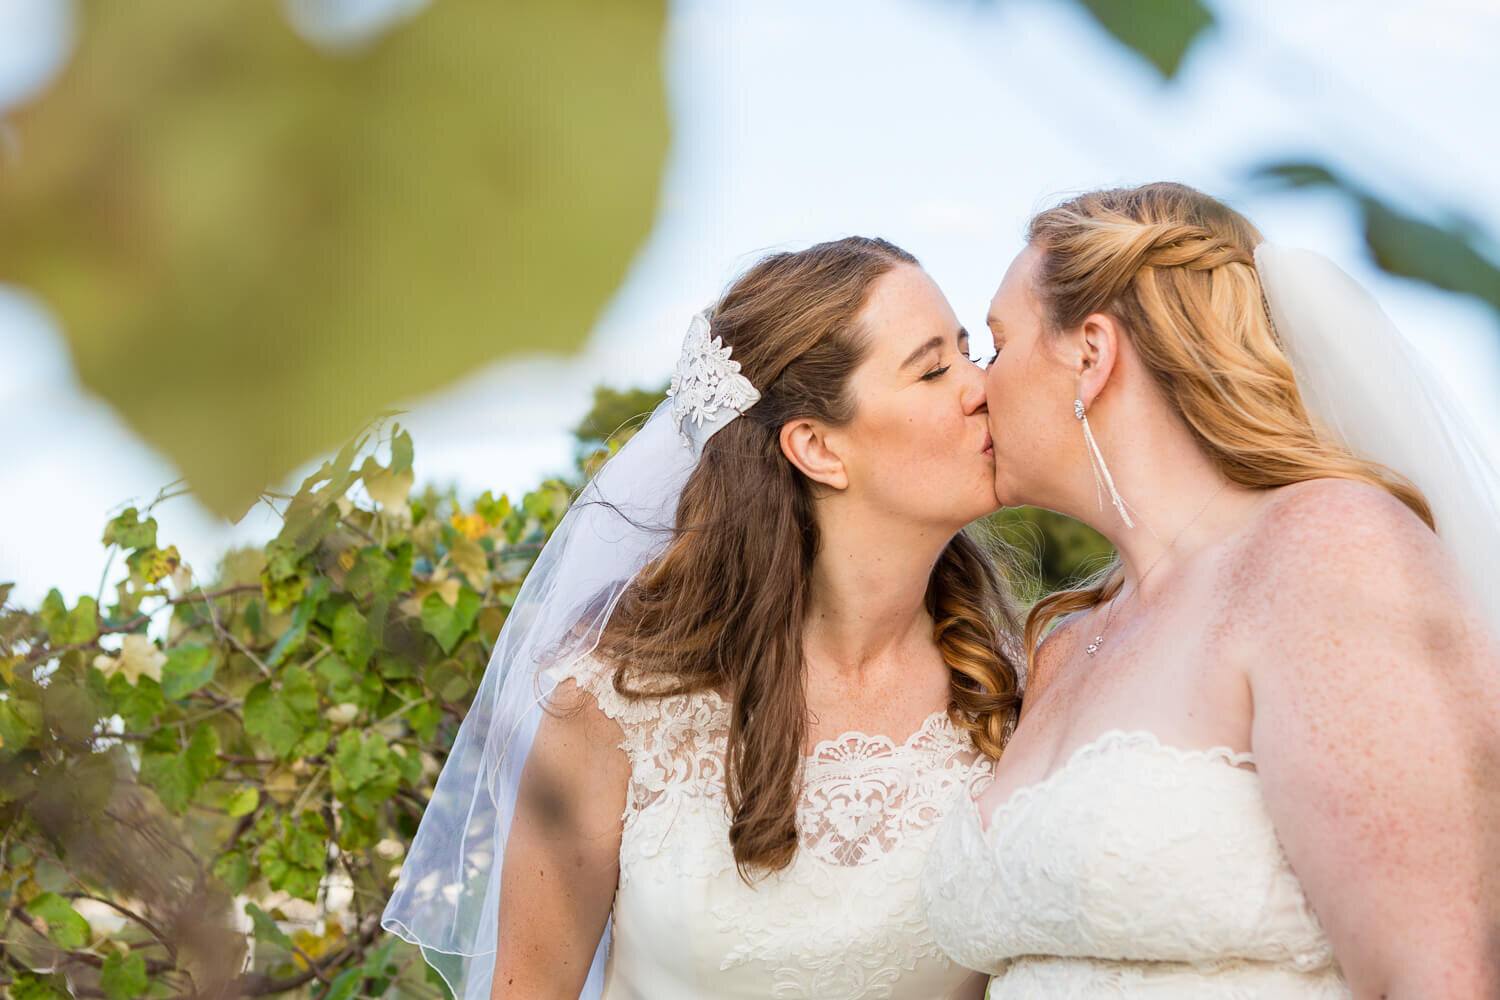  same-sex wedding photos from Island Grove Winery at Formosa Gardens 